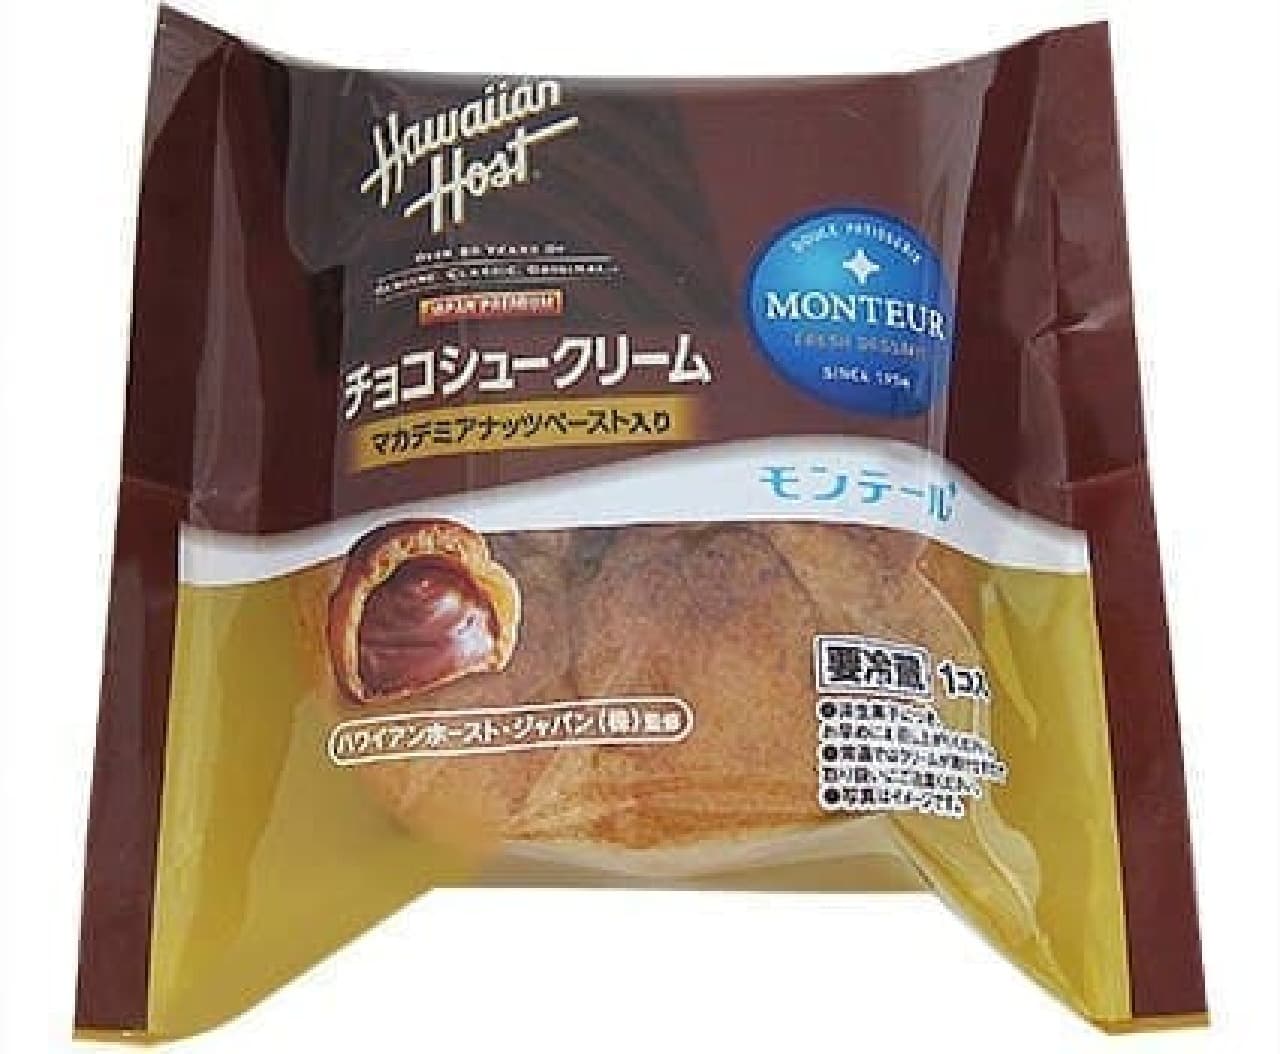 Sweets in collaboration with Hawaii's popular chocolate brand "Hawaiian Horst"